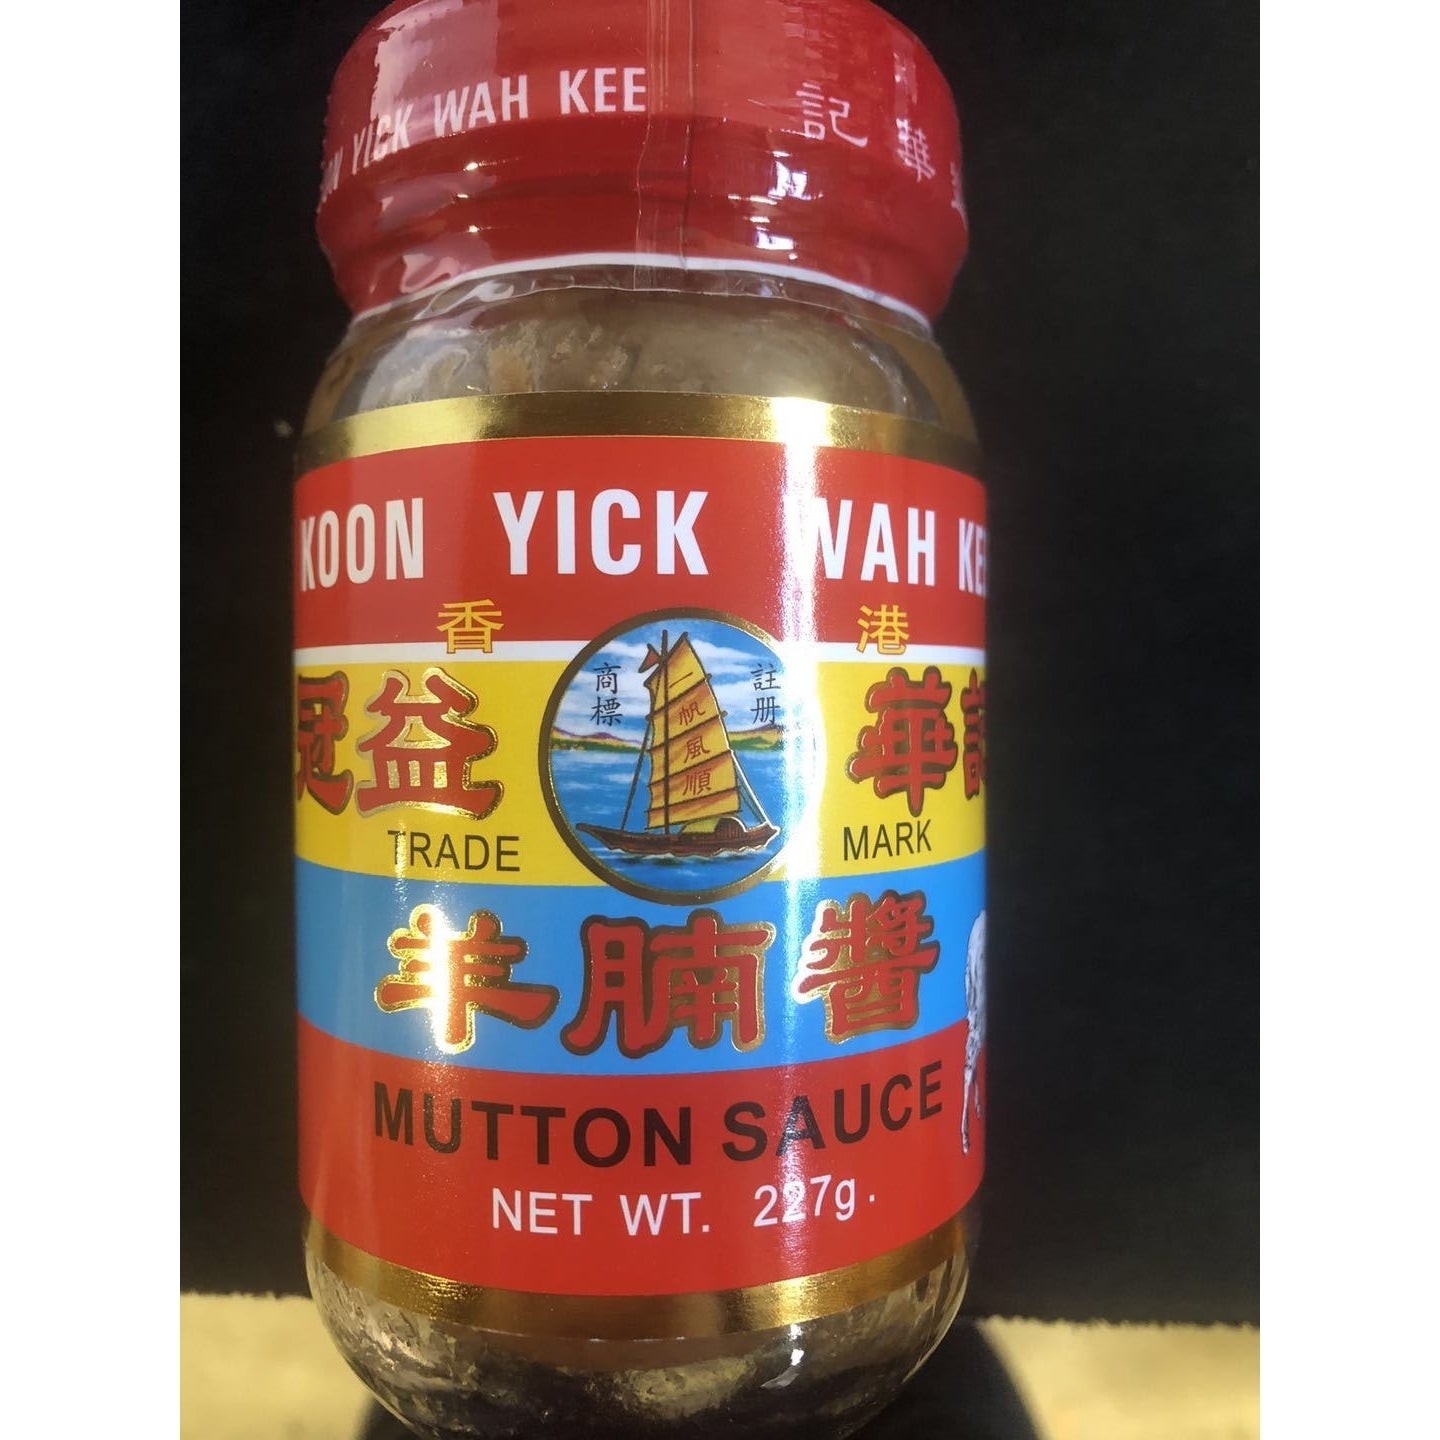 kywk-mutton-sauce